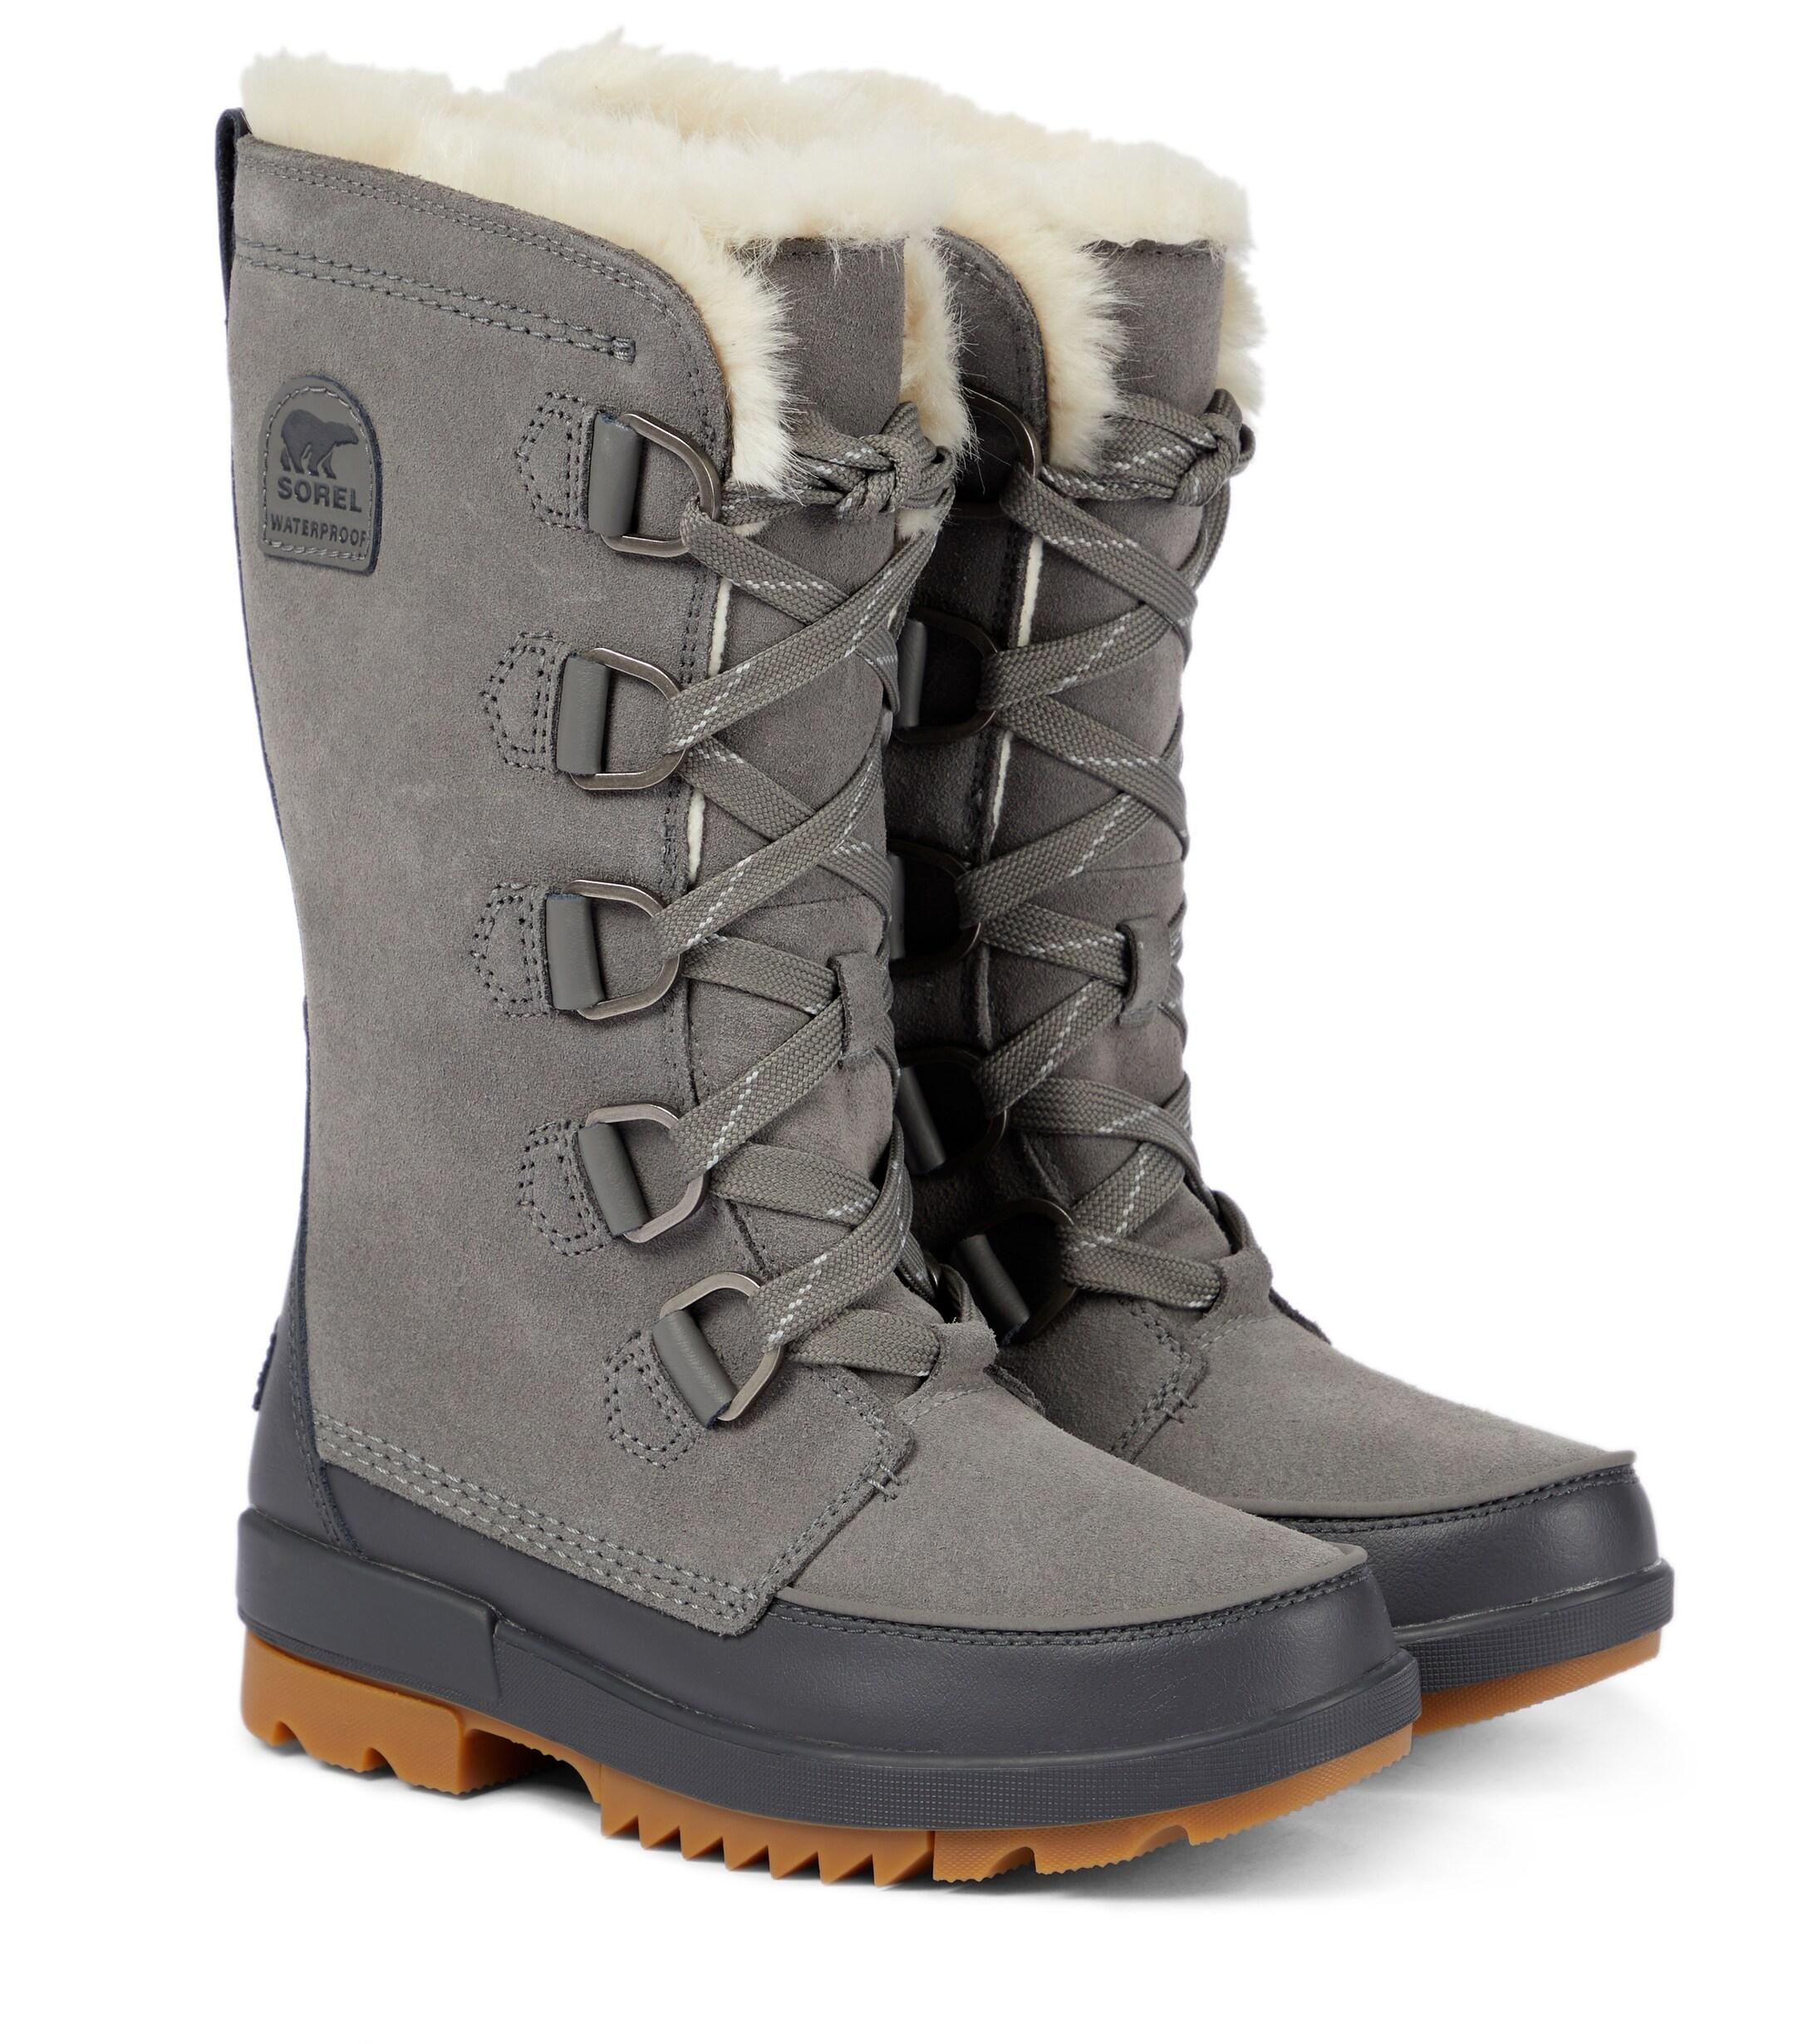 Sorel Fur Torino Ii Tall Snow Boots in Grey (Gray) - Lyst